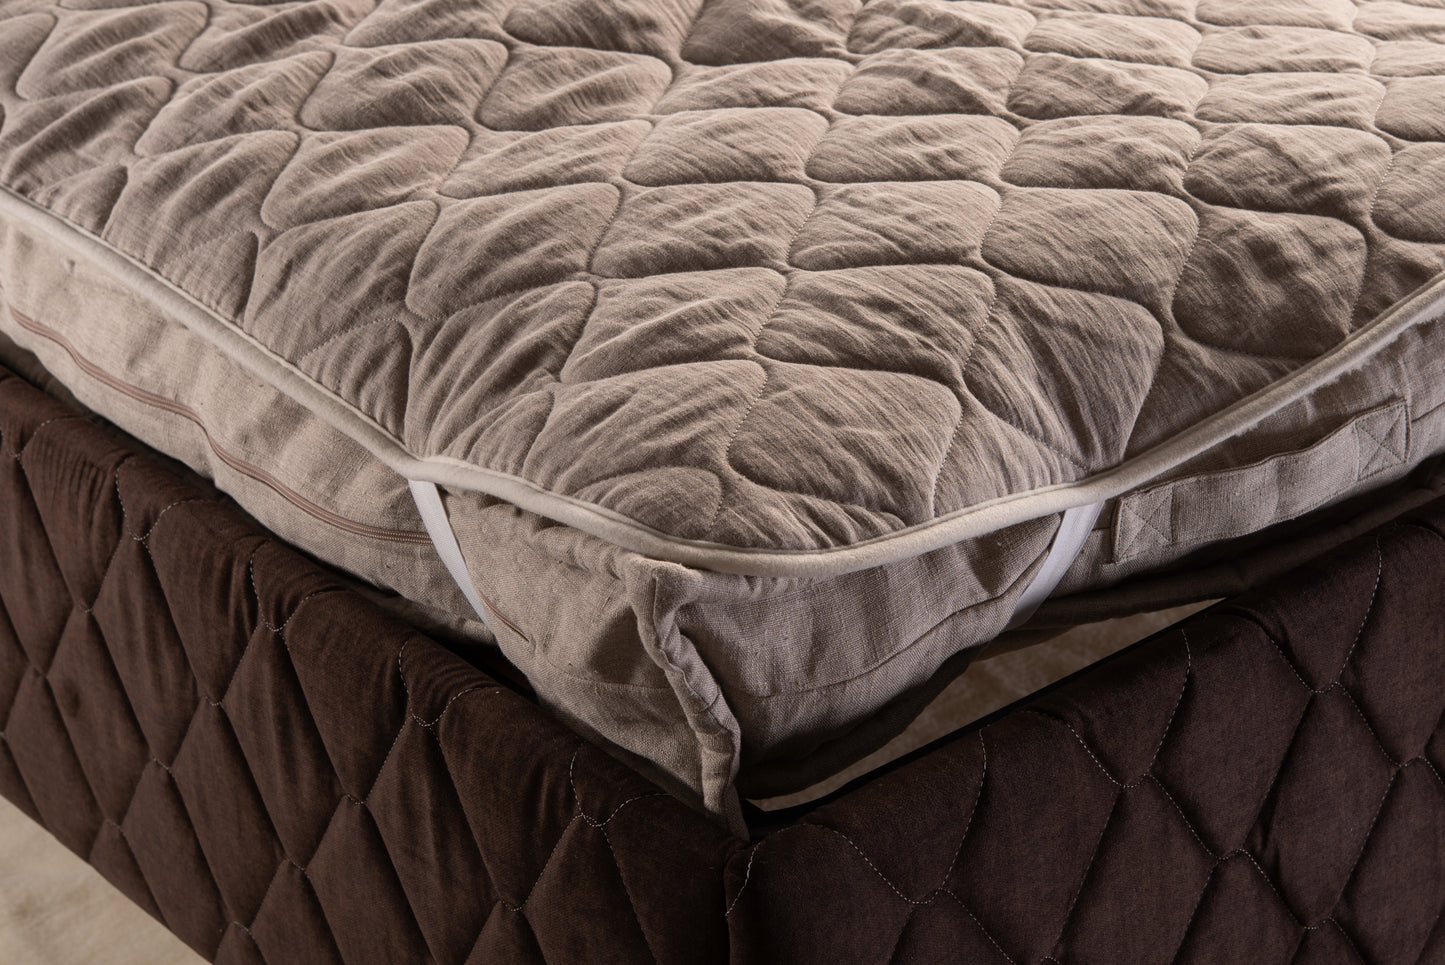 Natural Merino wool mattress protector